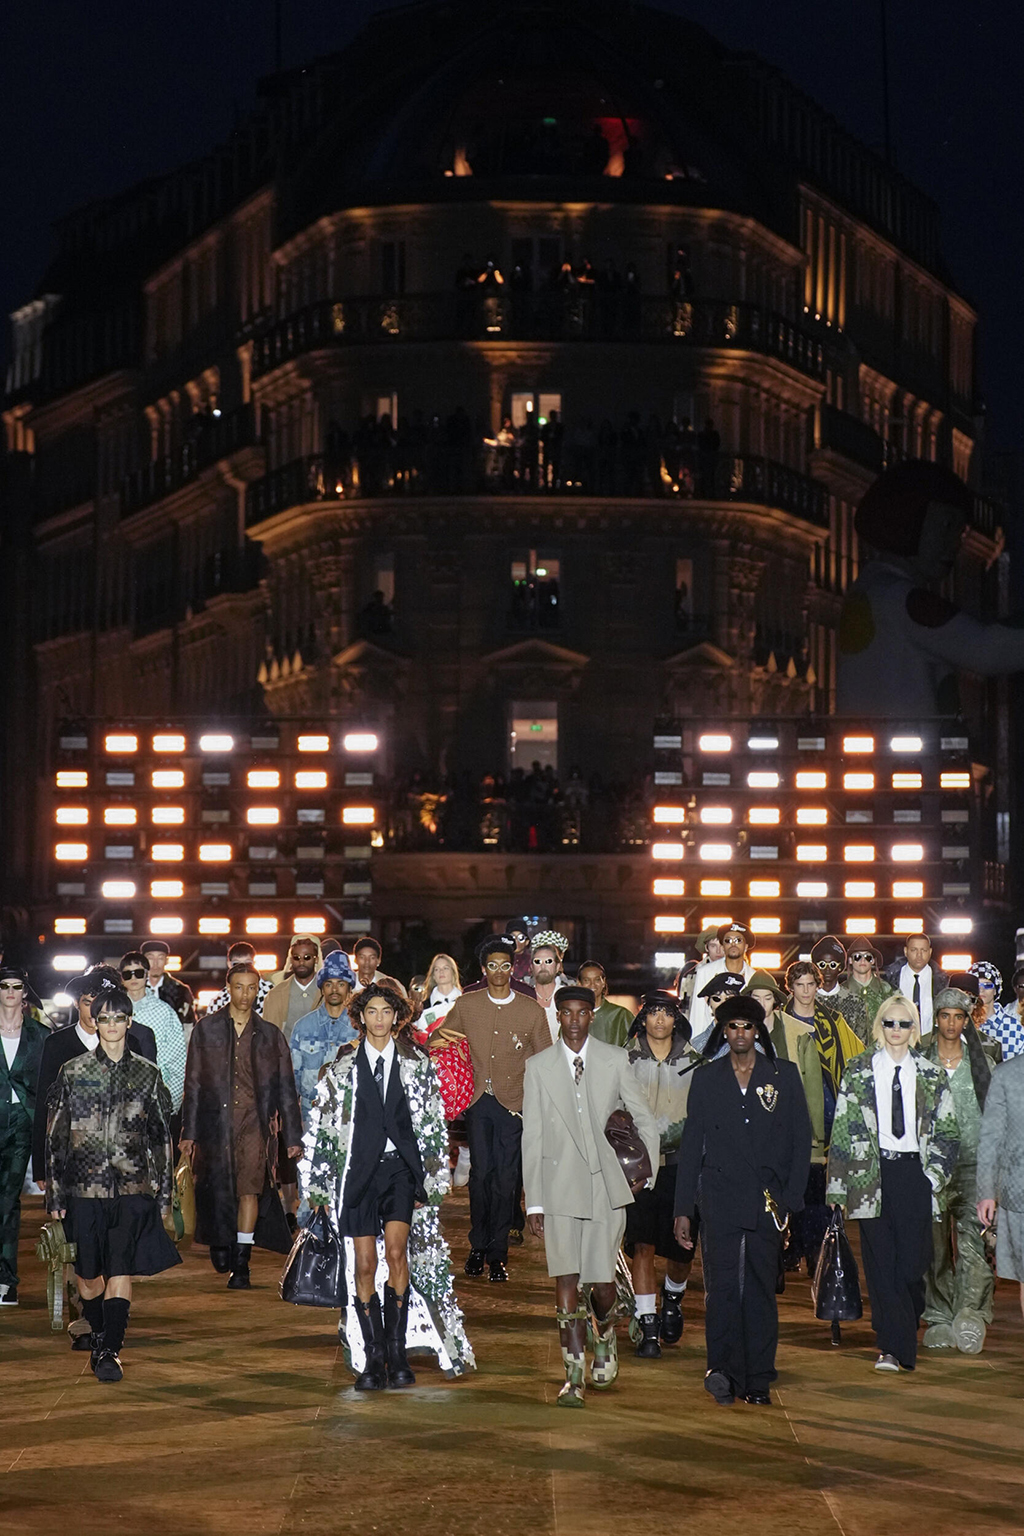 Reviewing the Louis Vuitton Soft trunk, men's fashion, runway